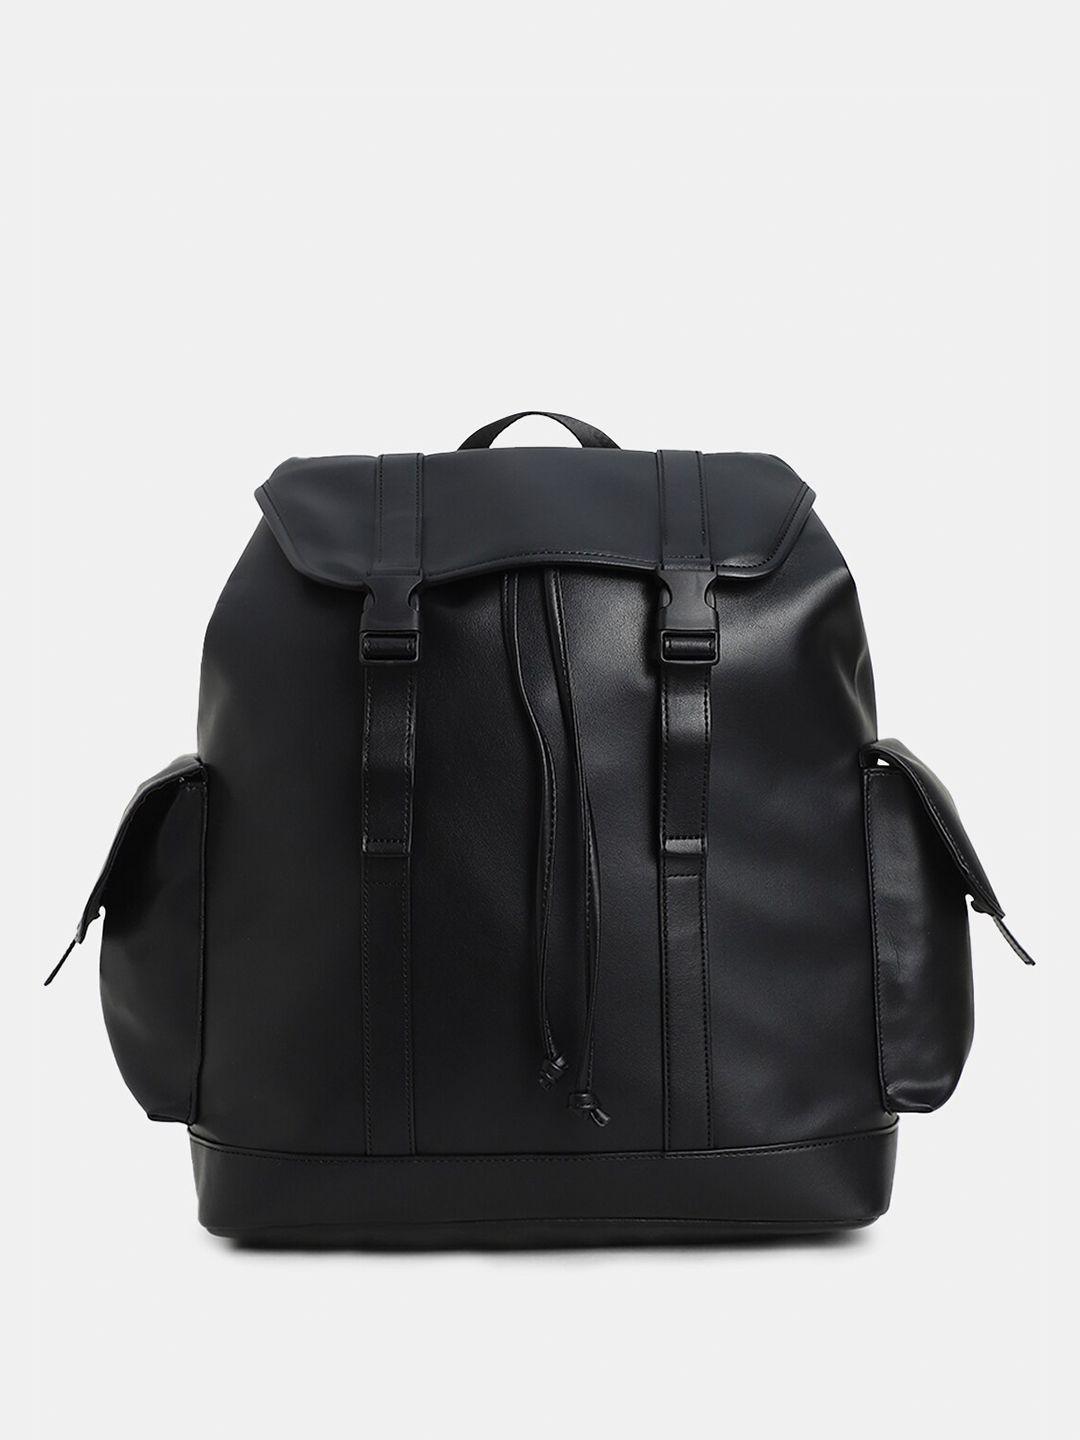 jack & jones men medium backpack up to 13 inch laptop